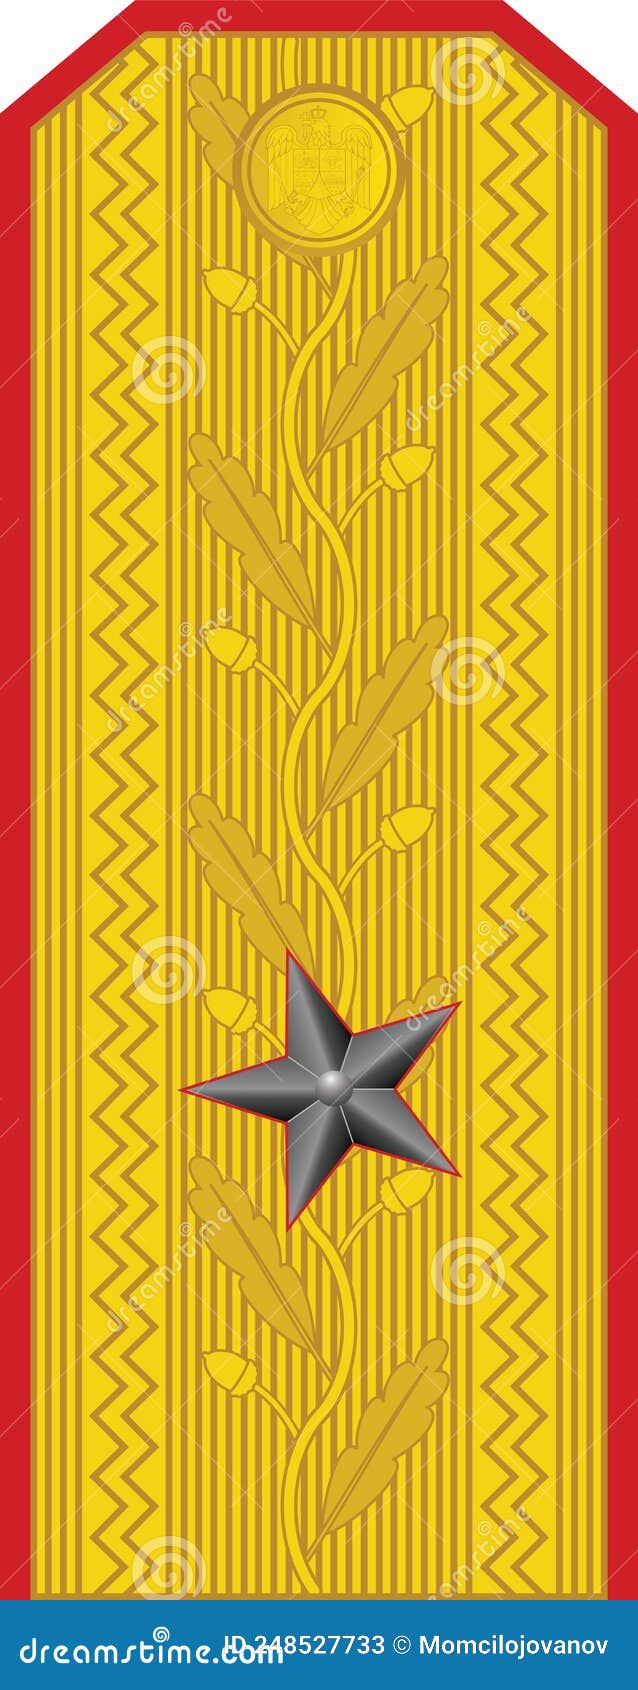 shoulder pad military nato officer insignia of the romanian general de brigadÃâ brigadier general